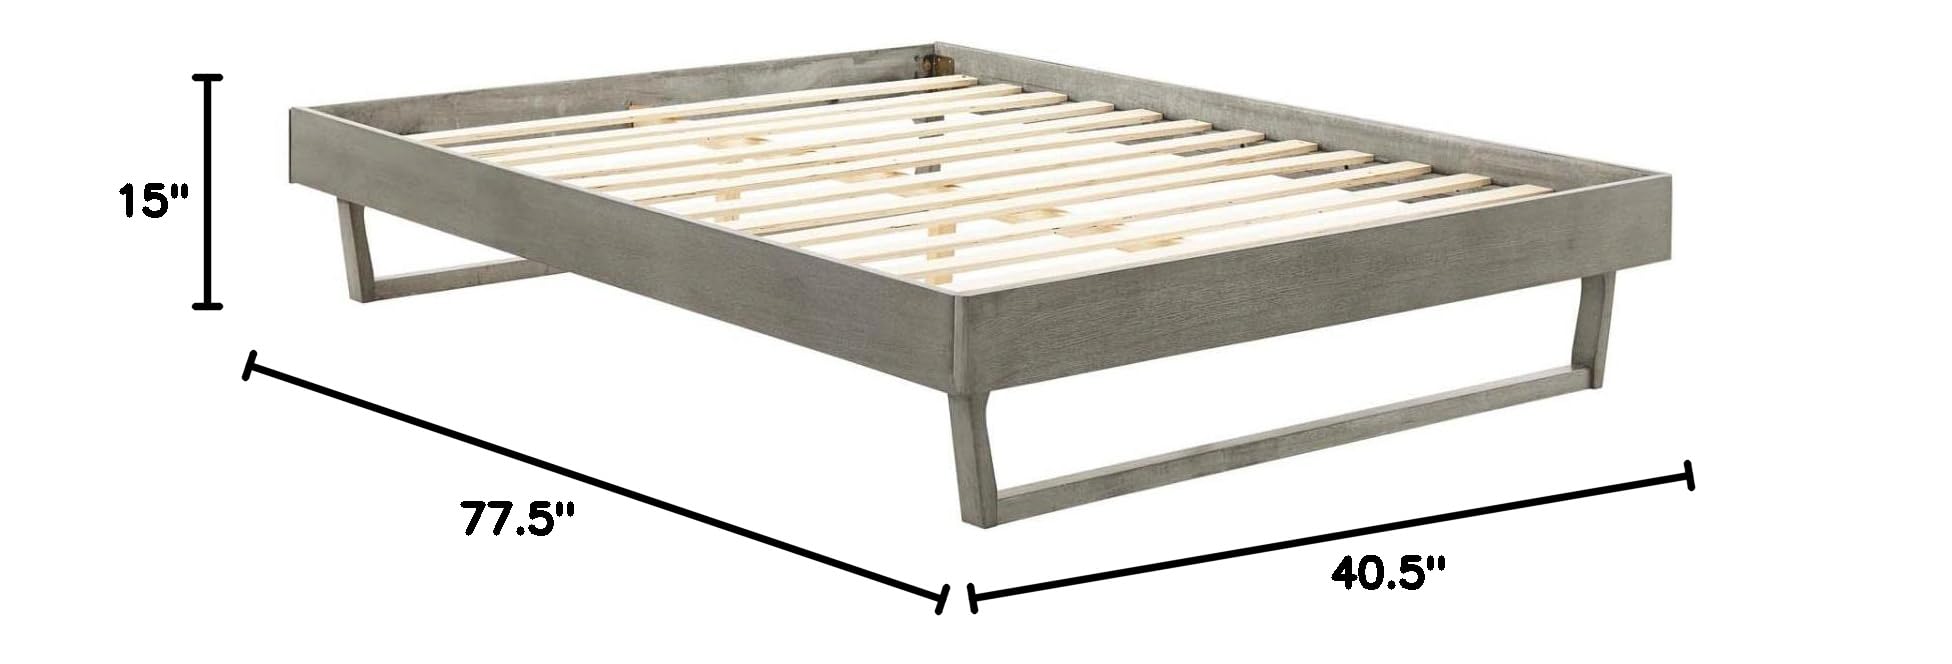 CasaFoyer Billie Twin Platform Bed Frame | Modern Style | Mid-Century Design | Interchangeable Headboards | Durable Wood Construction | No Box Spring Needed